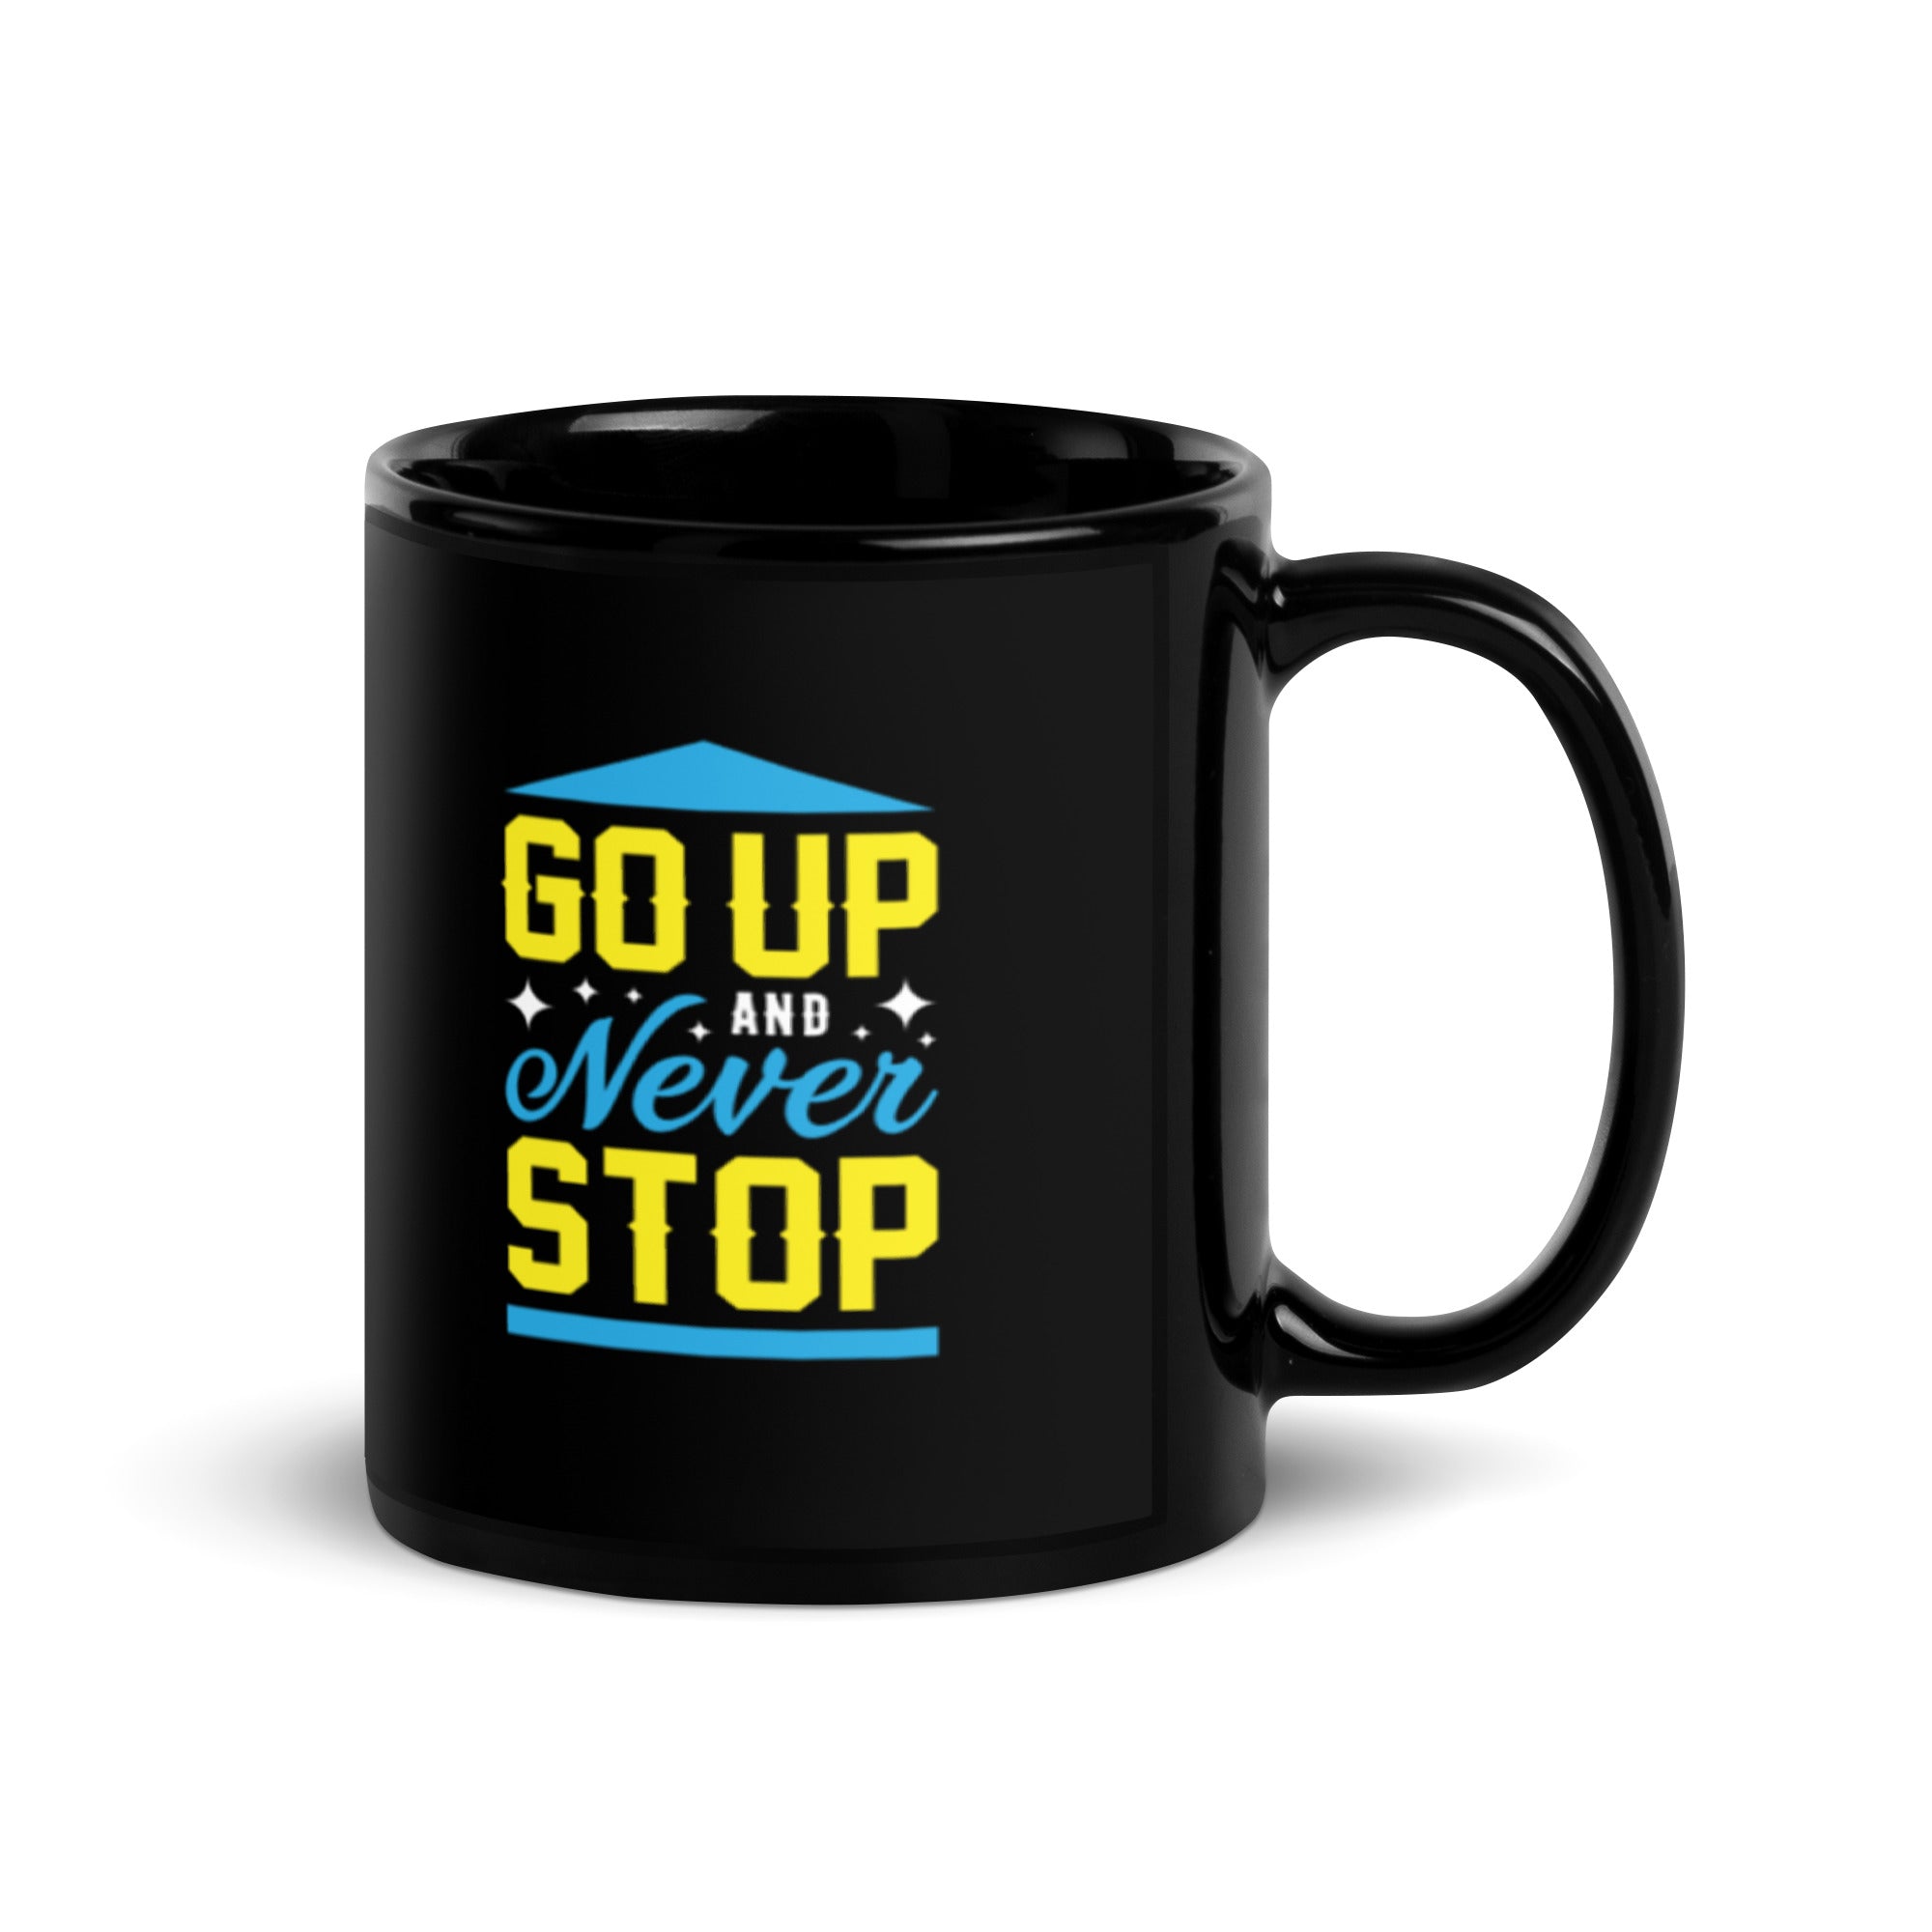 Go Up And Never Stop - Black Glossy Mug